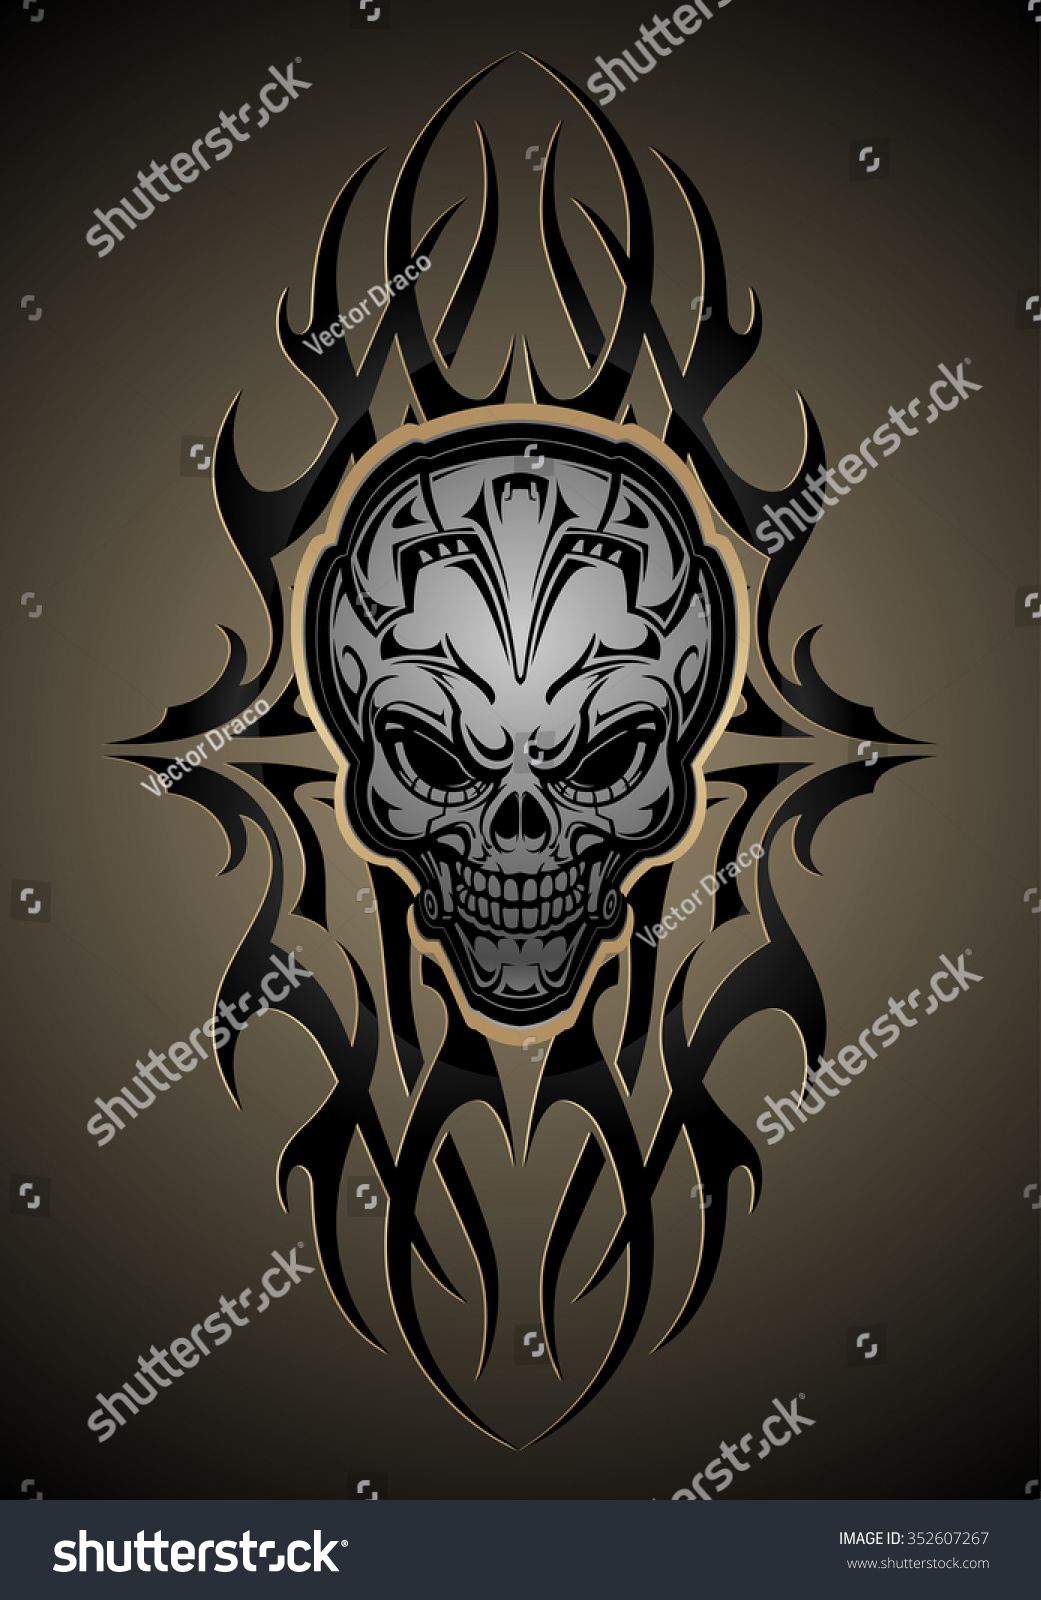 Mechanical Skull Tattoorobotic Head Against Tribal Stock Vector ...